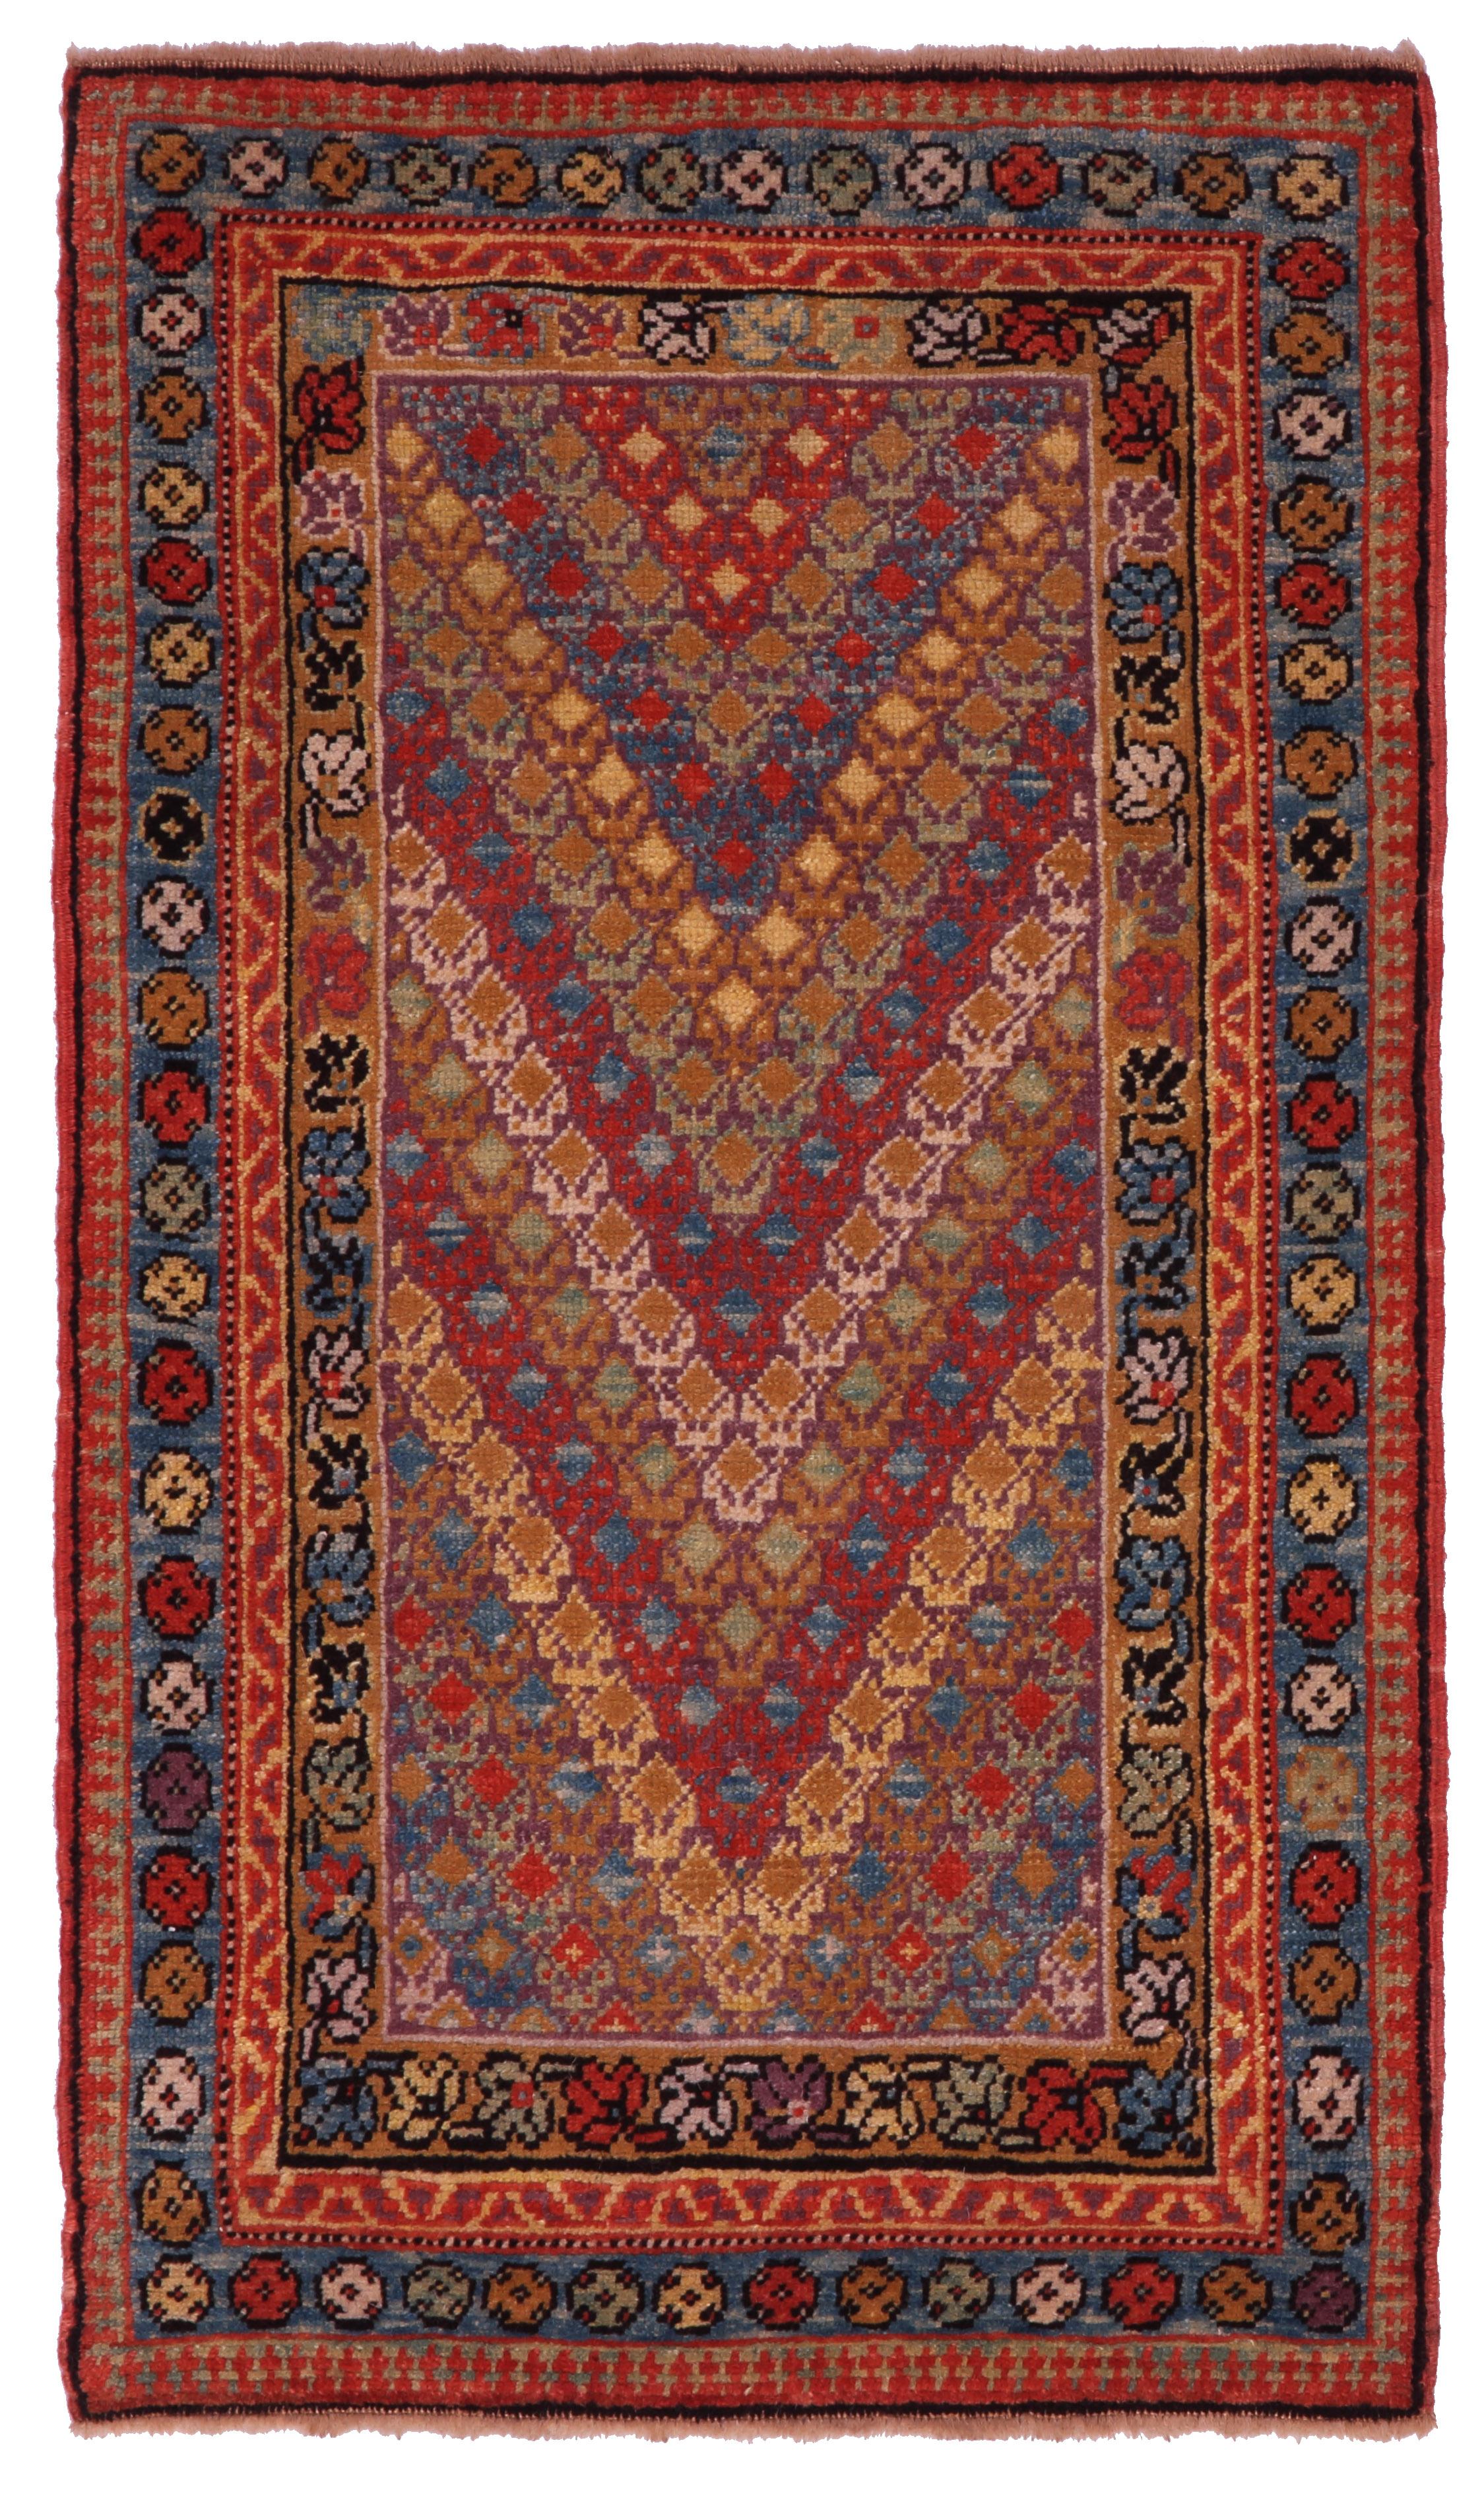 Ararat Rugs Anatolian Yastik Rug Revival Turkish Wagireh Carpet Natural Dyed For Sale